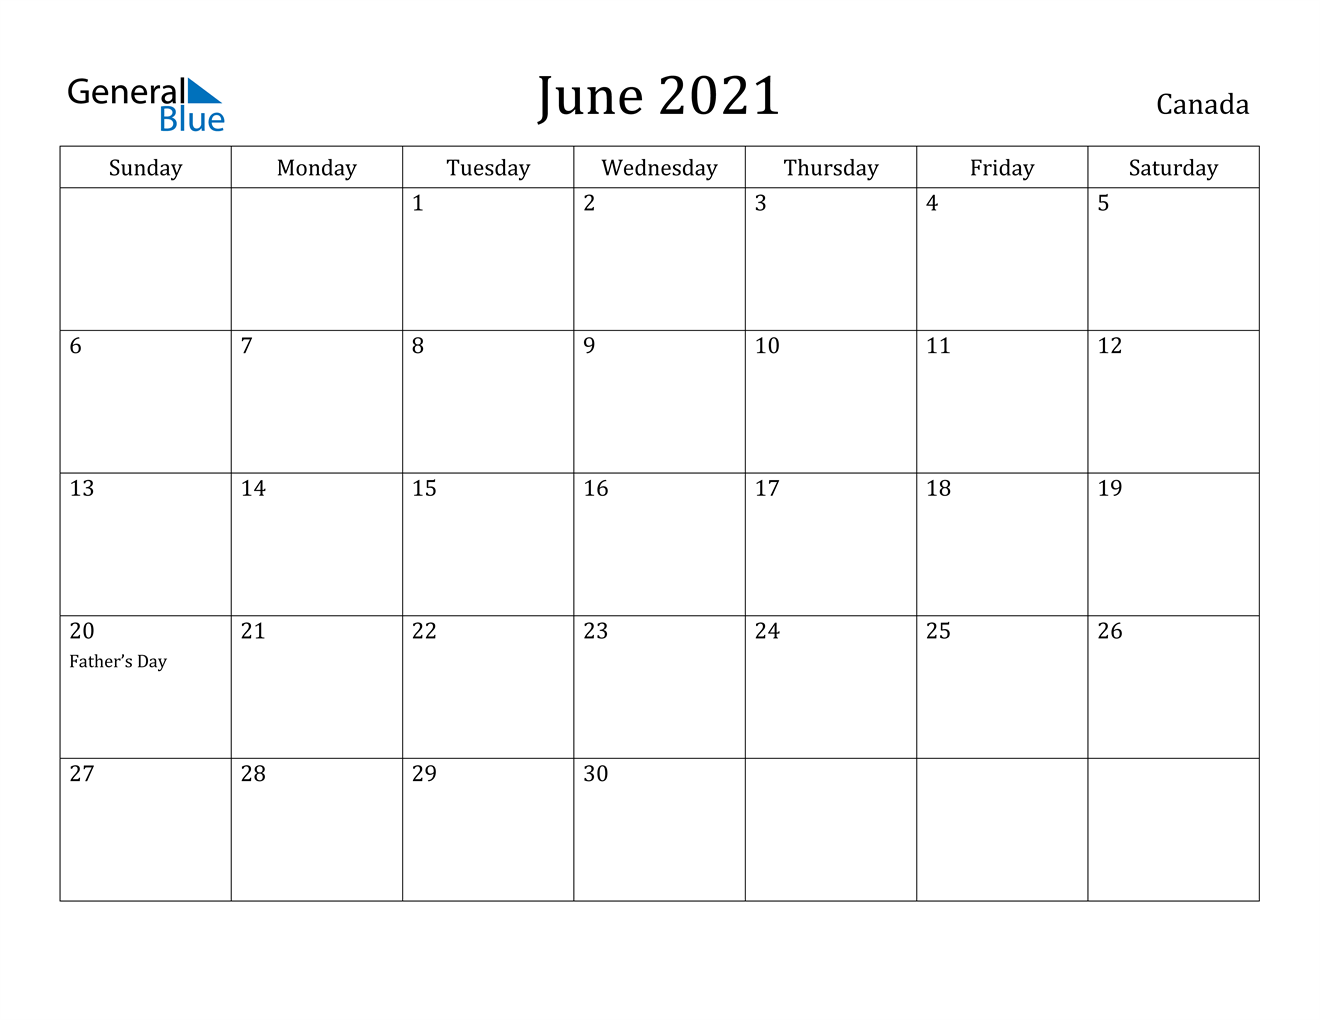 June 2021 Calendar - Canada